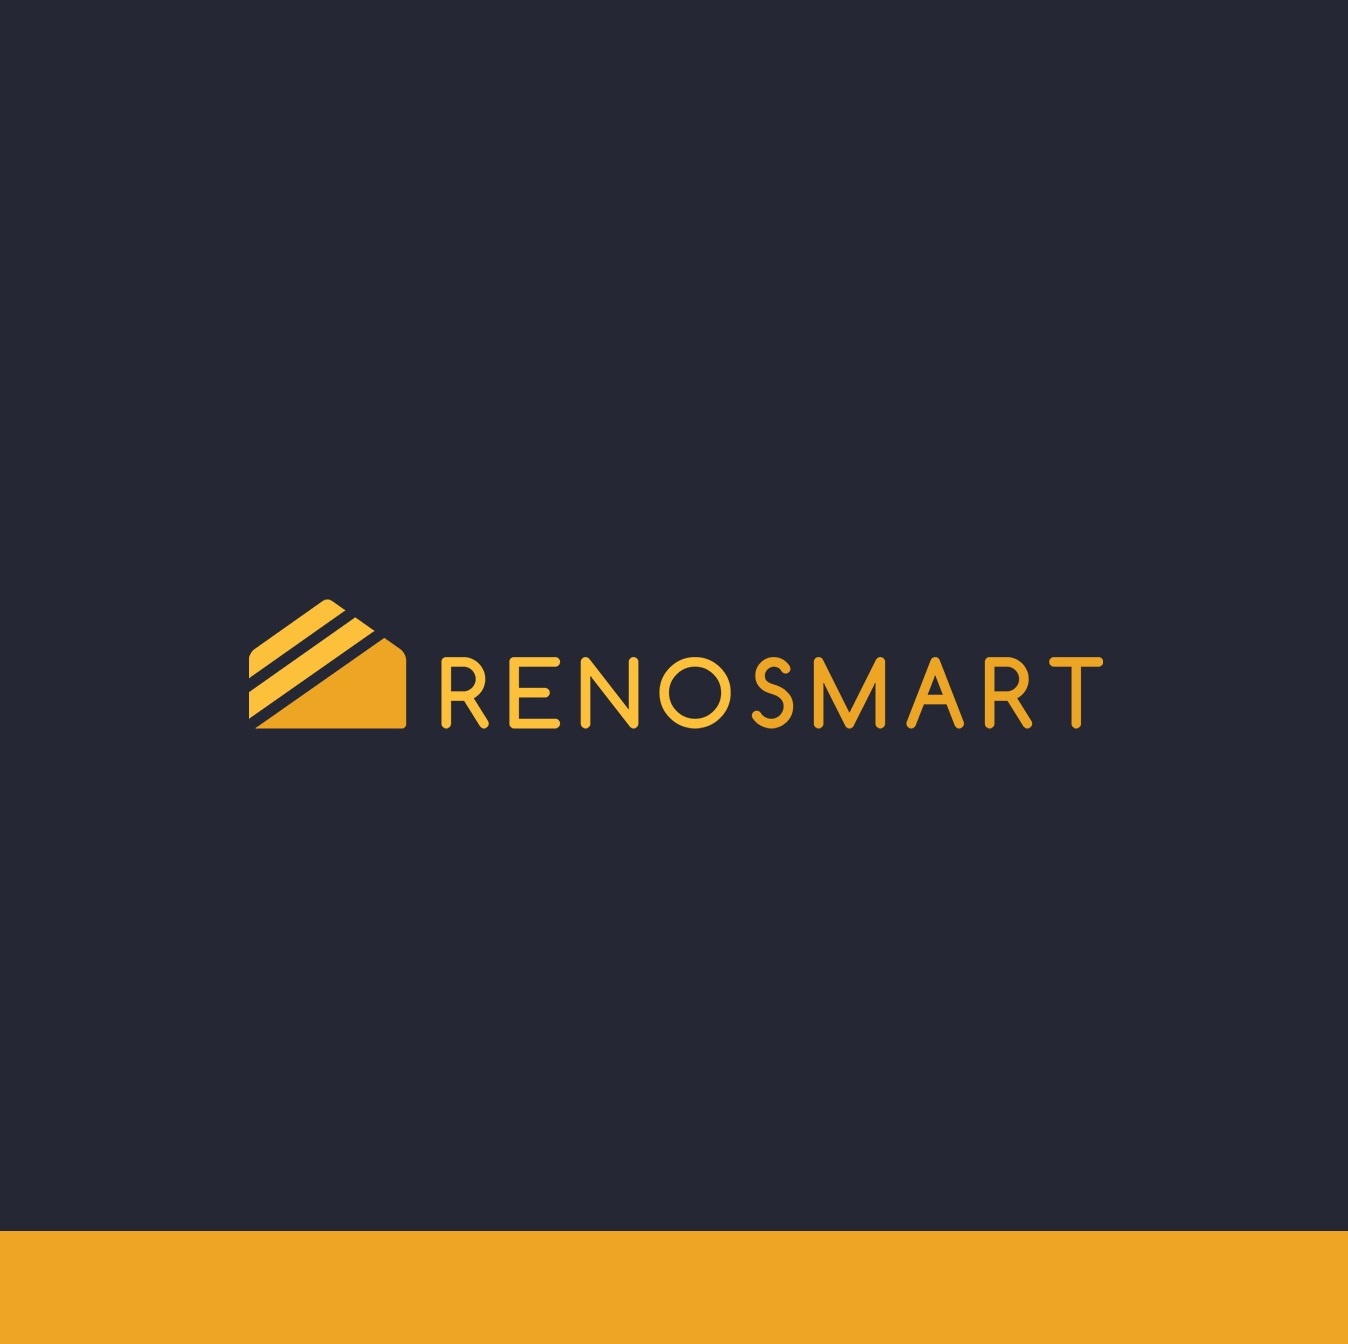 Renosmart's logo